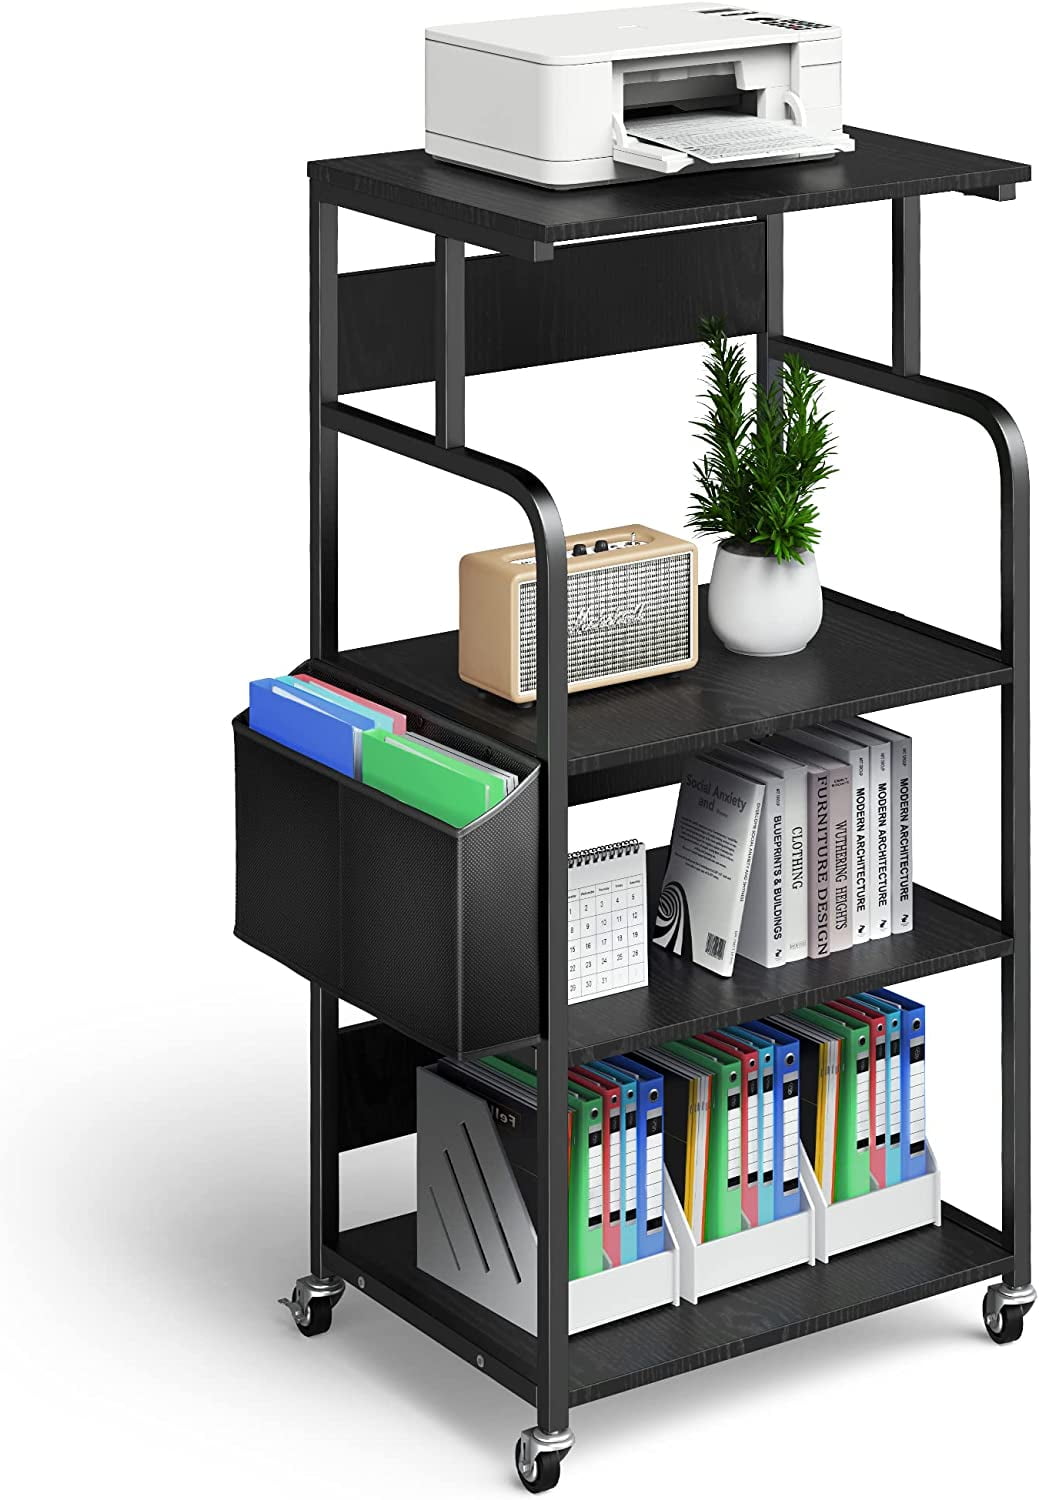 daily supplies Wooden Desktop Printer Stand,Home Office Printer Rack Double-Layer Copier Scanner Finishing Rack， for Folder Storage/Bookshelves